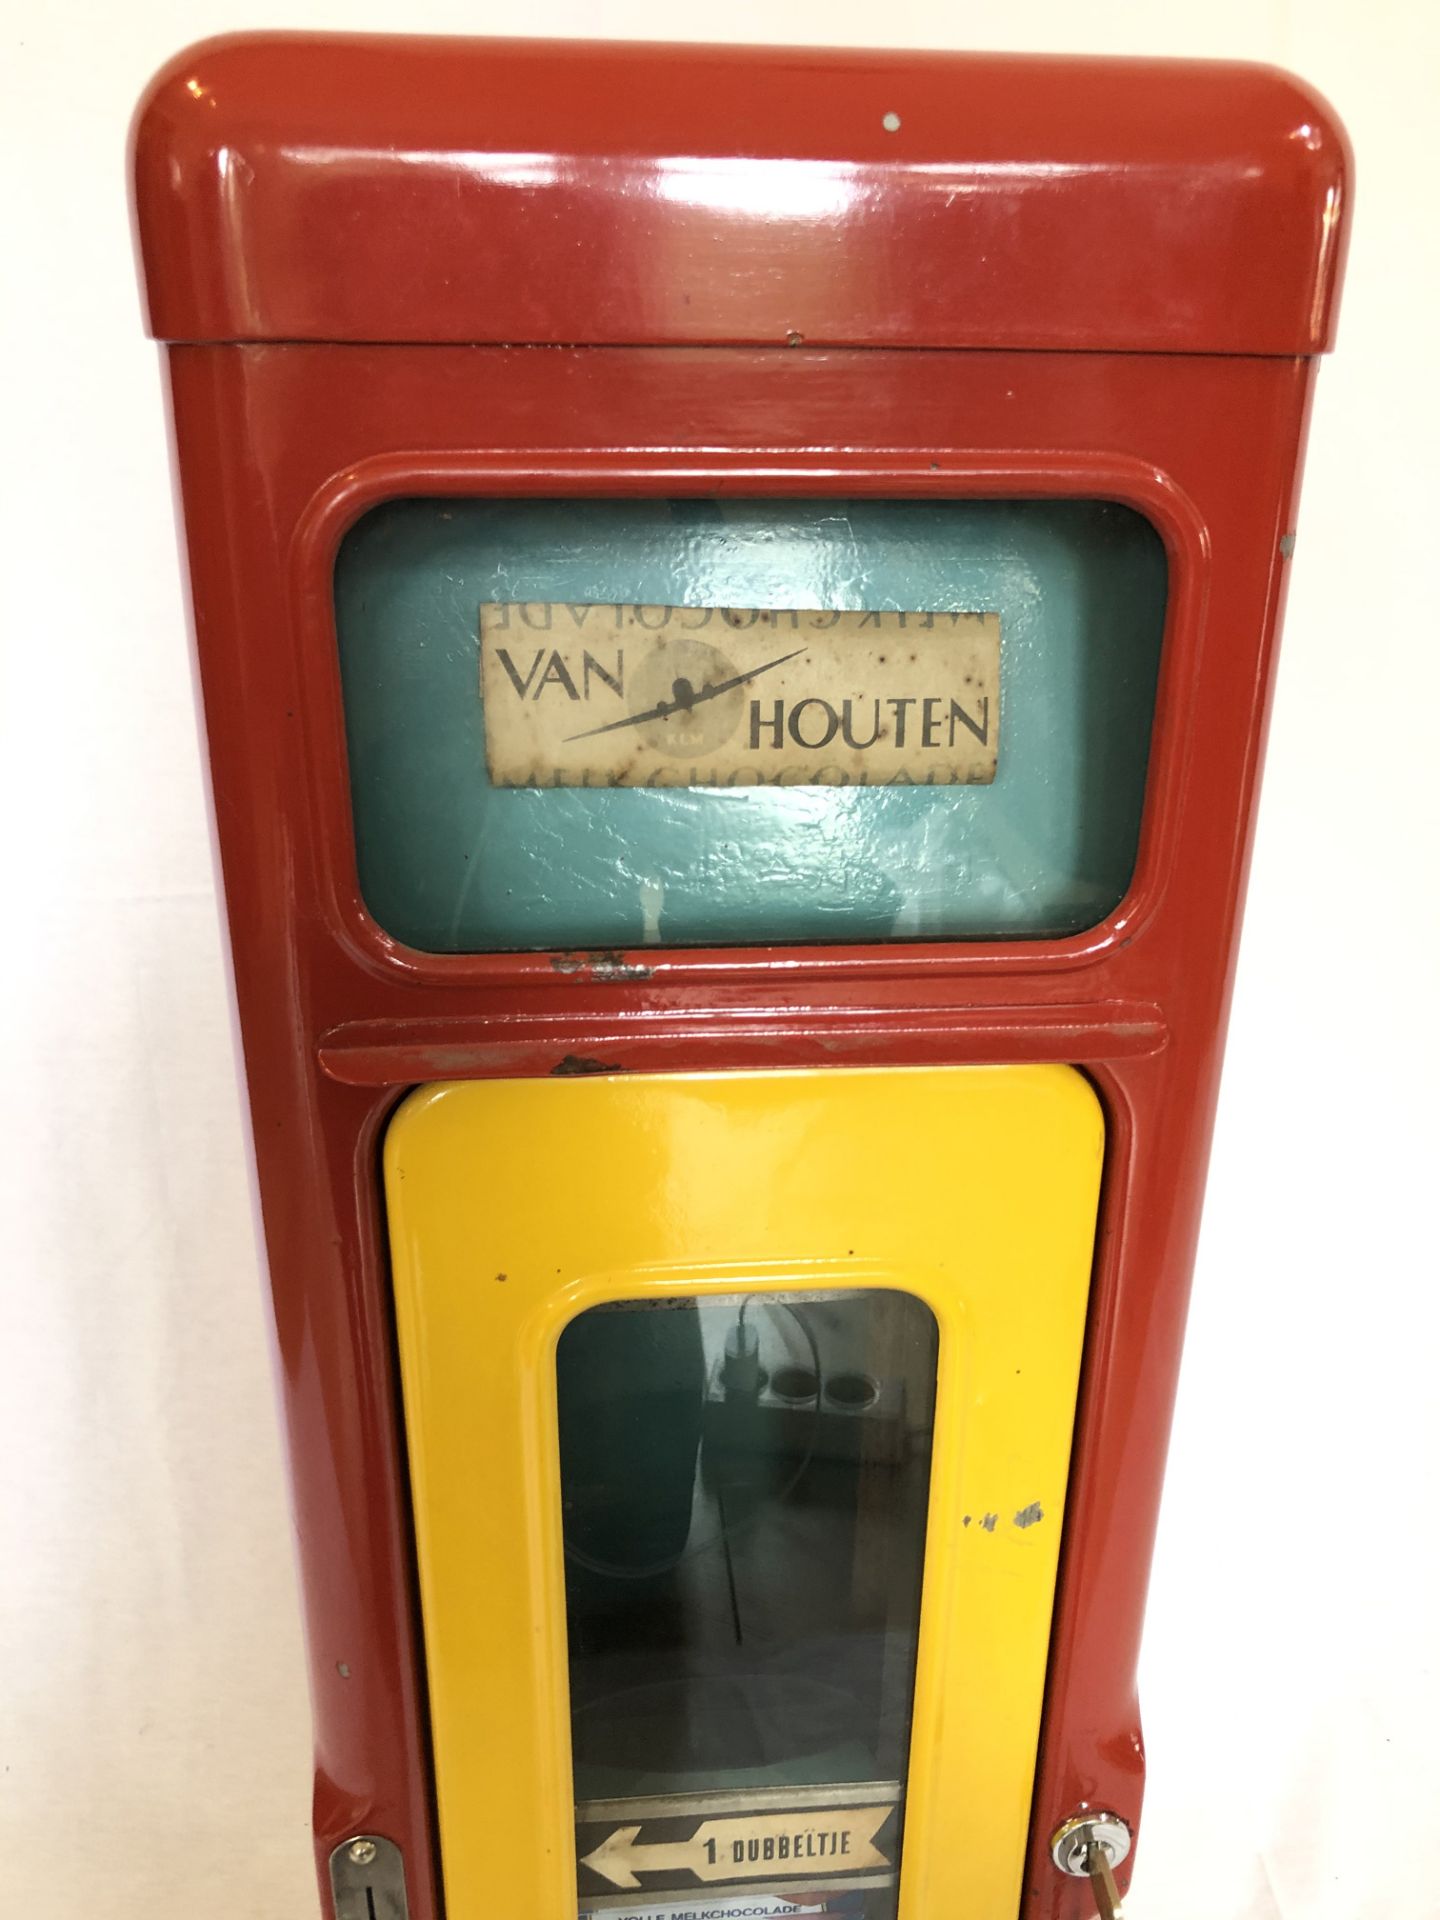 1950 Van Houten Chocolate Bar Vending Machine - Image 3 of 7